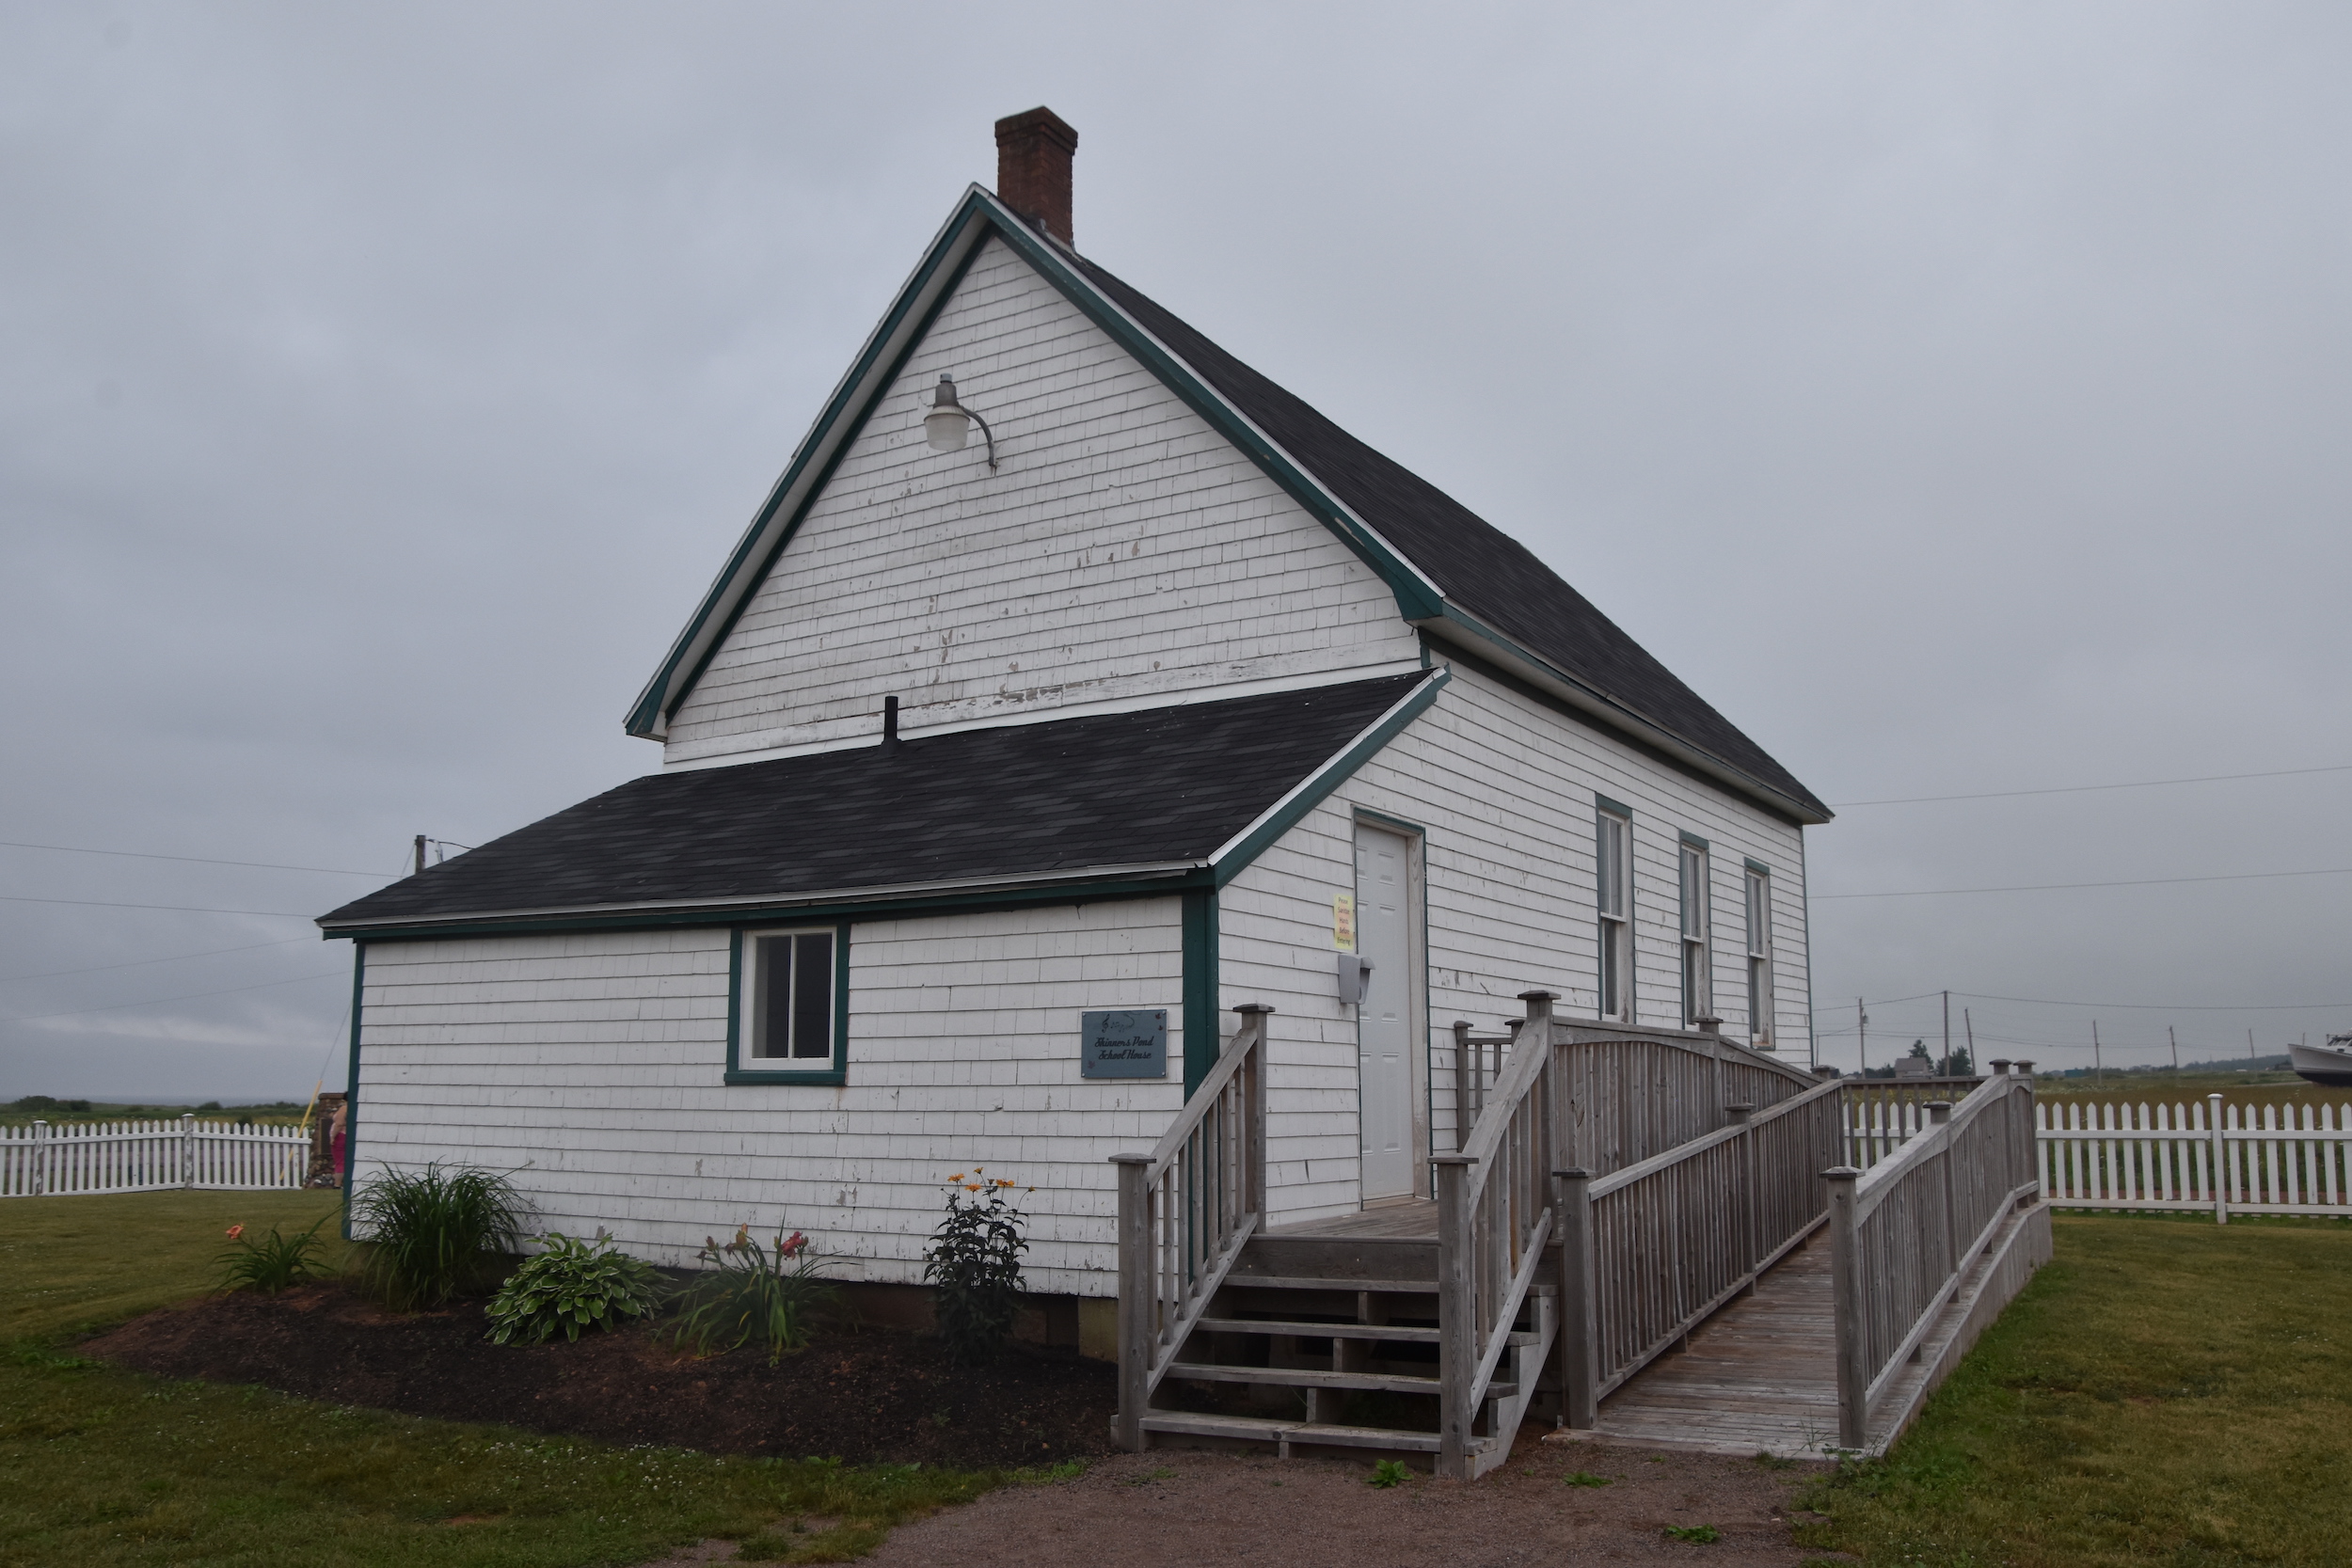 Skinner's Pond Schoolhouse, North Cape Coastral Drive